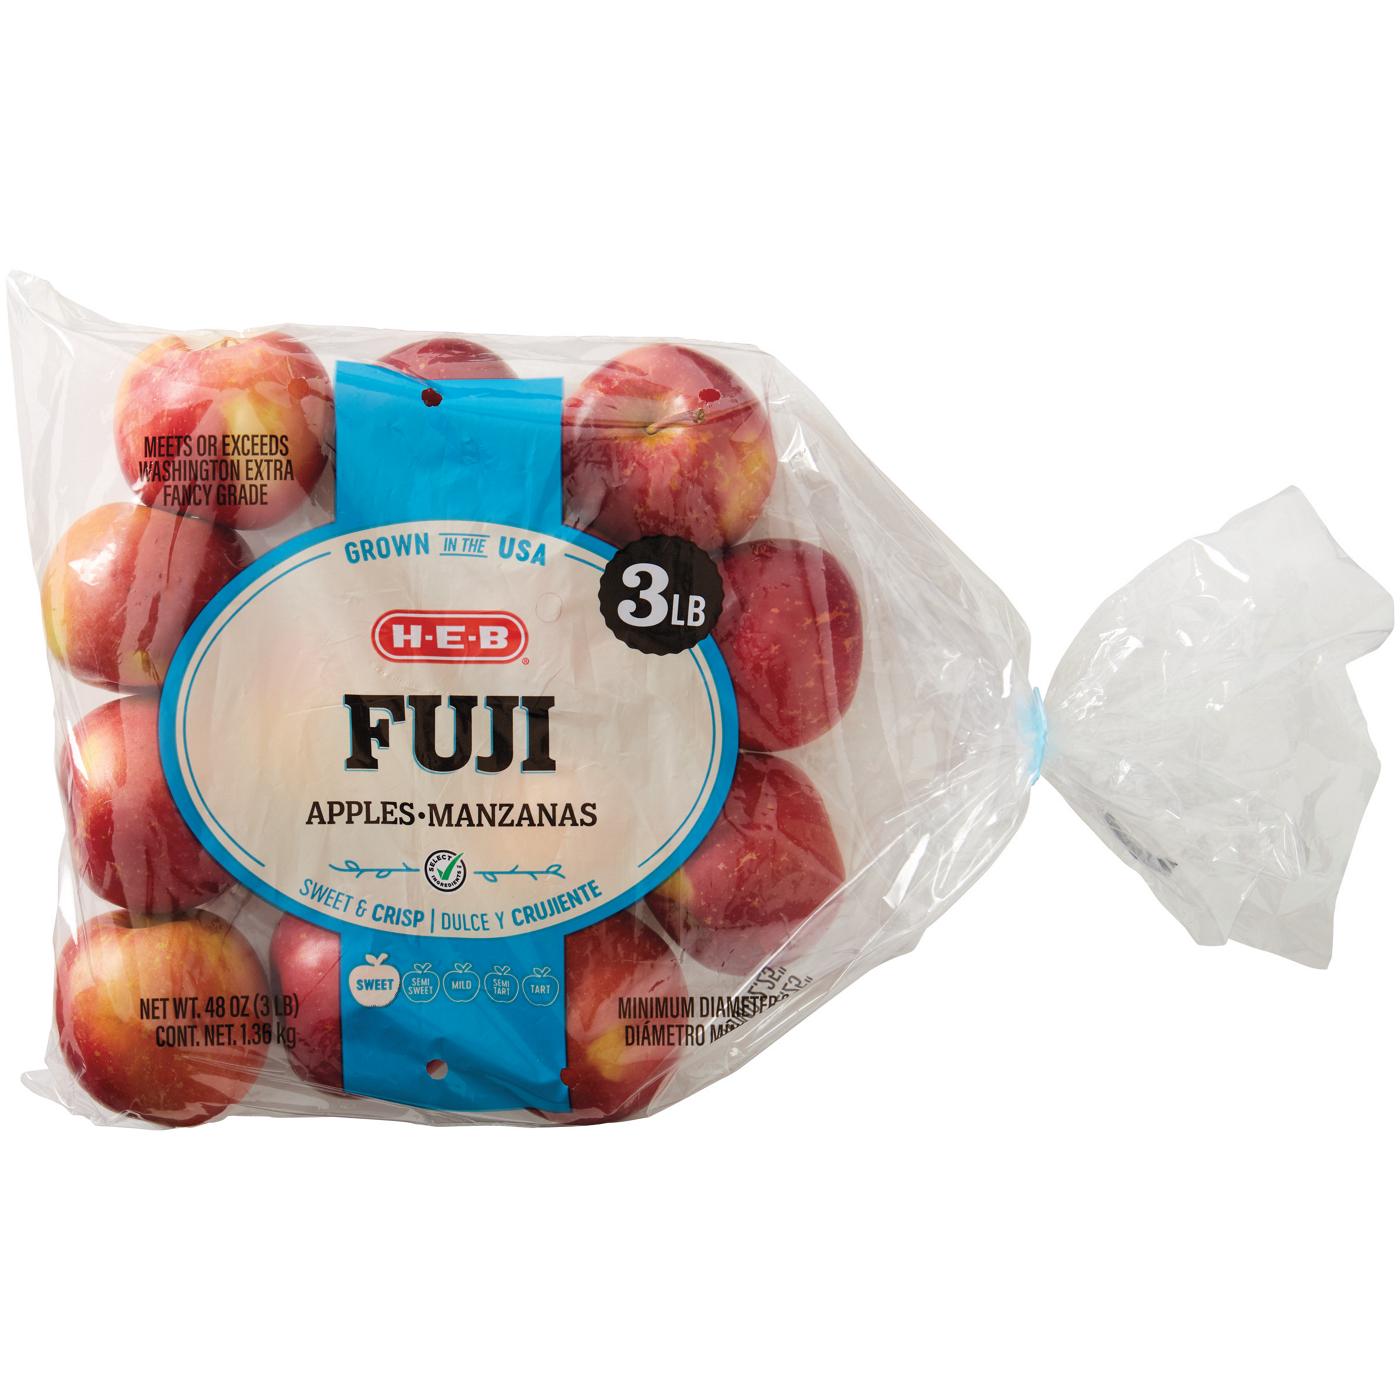 H-E-B Fresh Fuji Apples; image 1 of 2